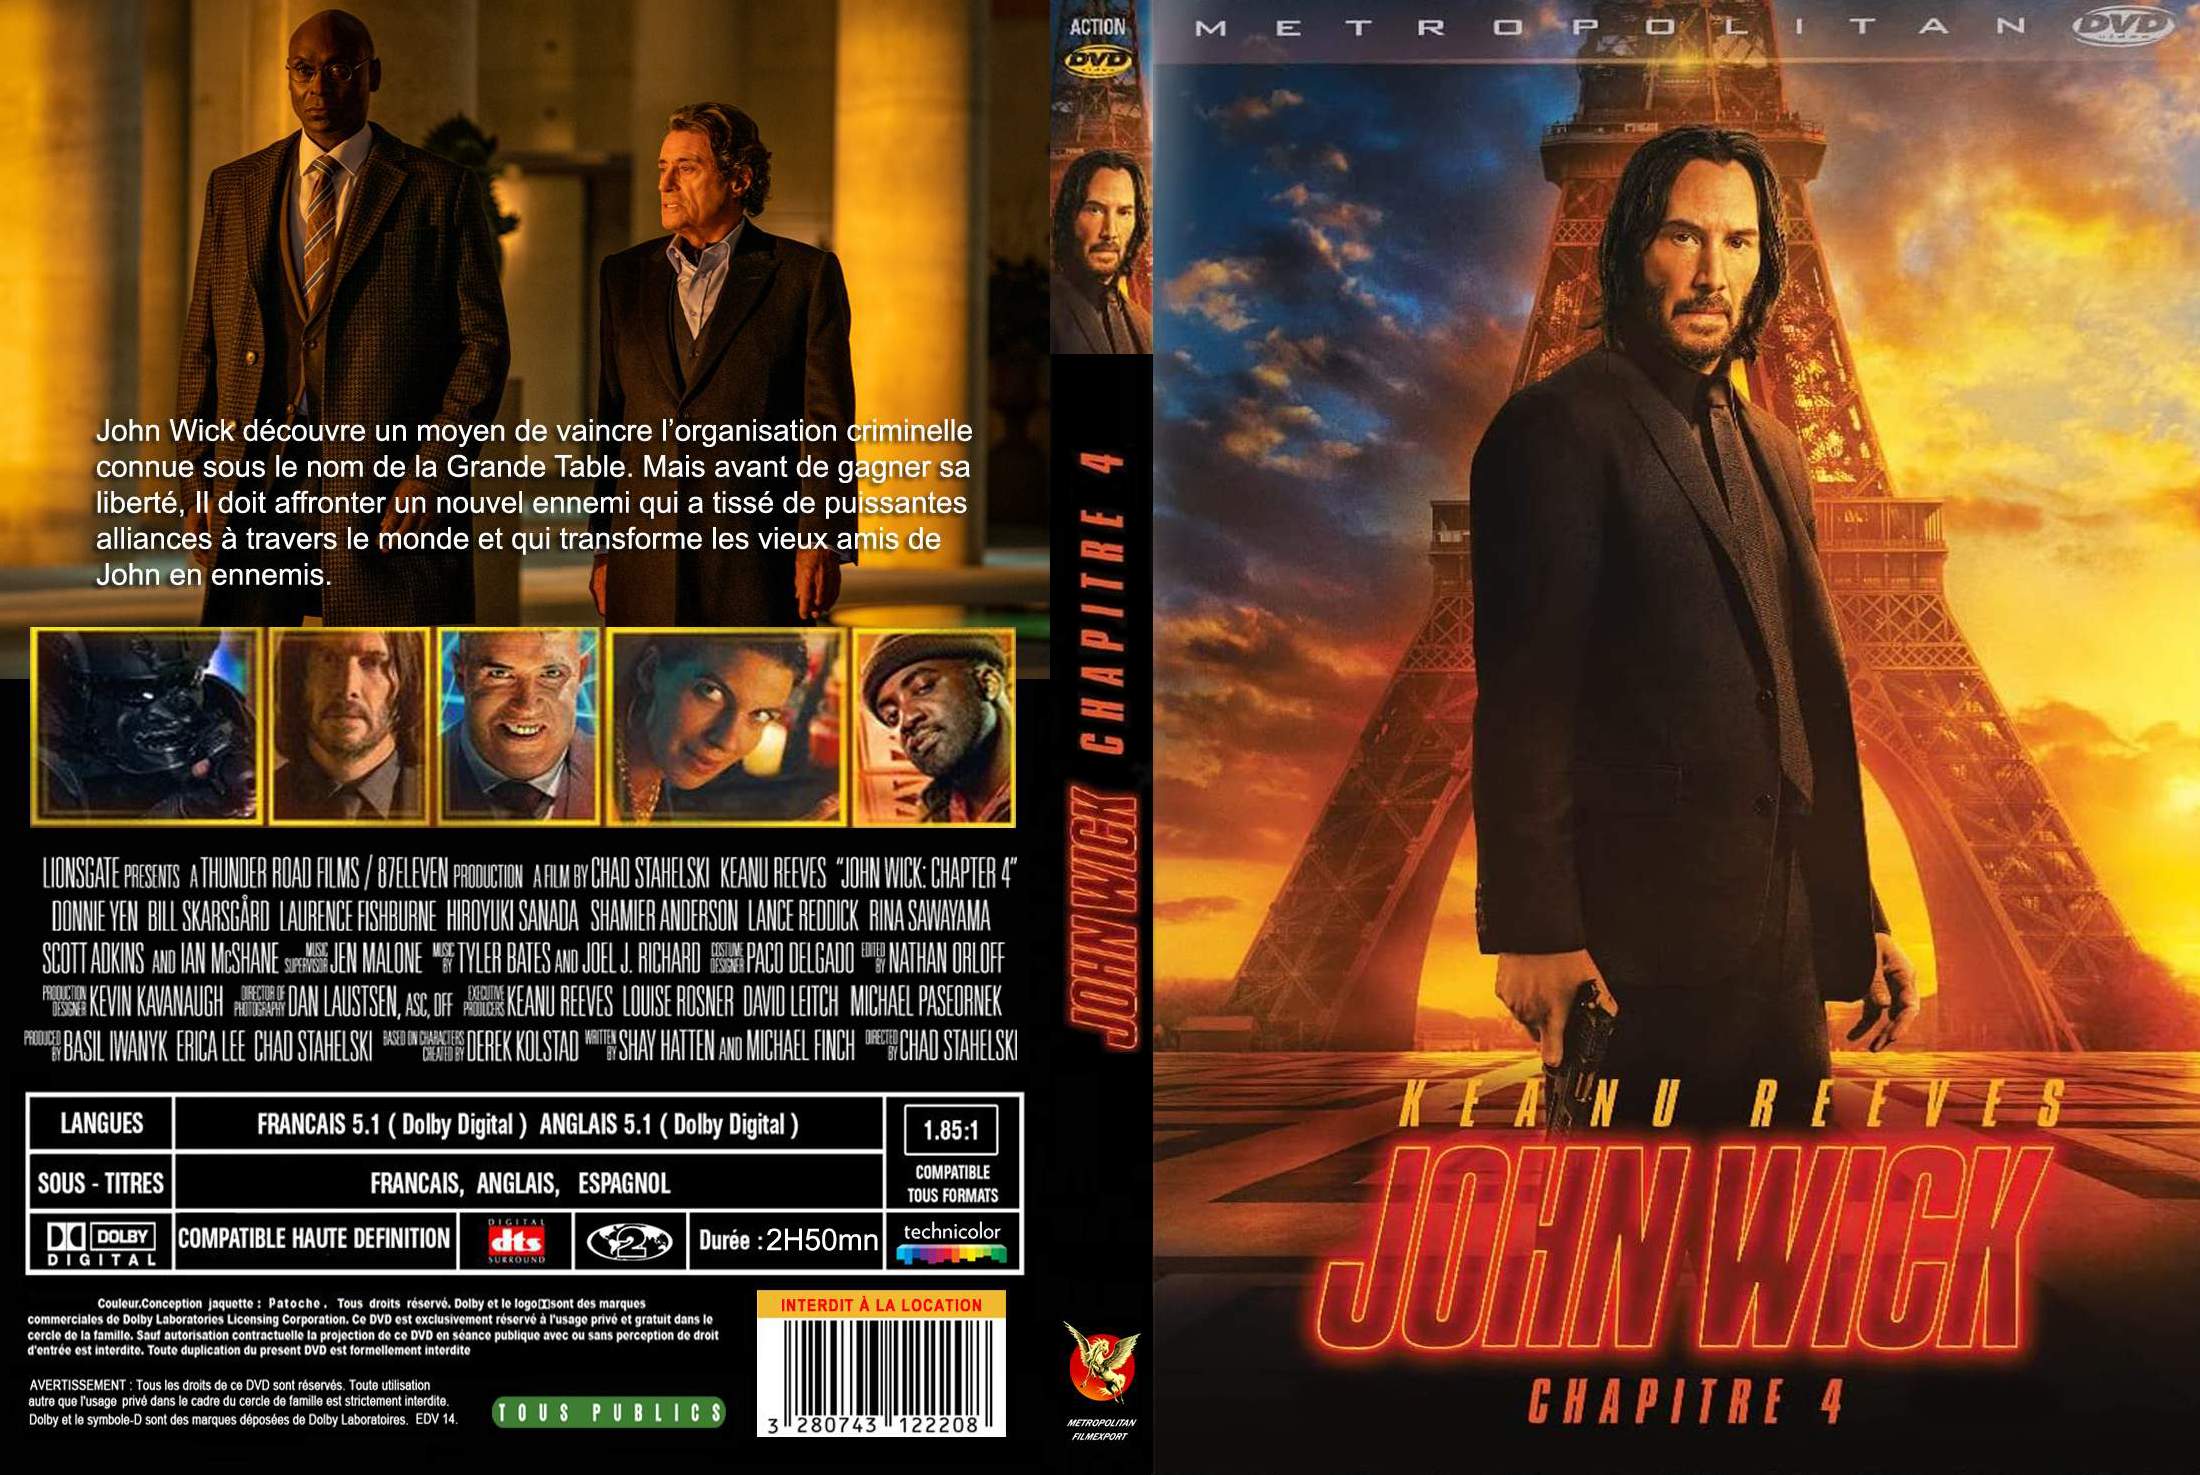 Jaquette DVD John Wick 4 custom